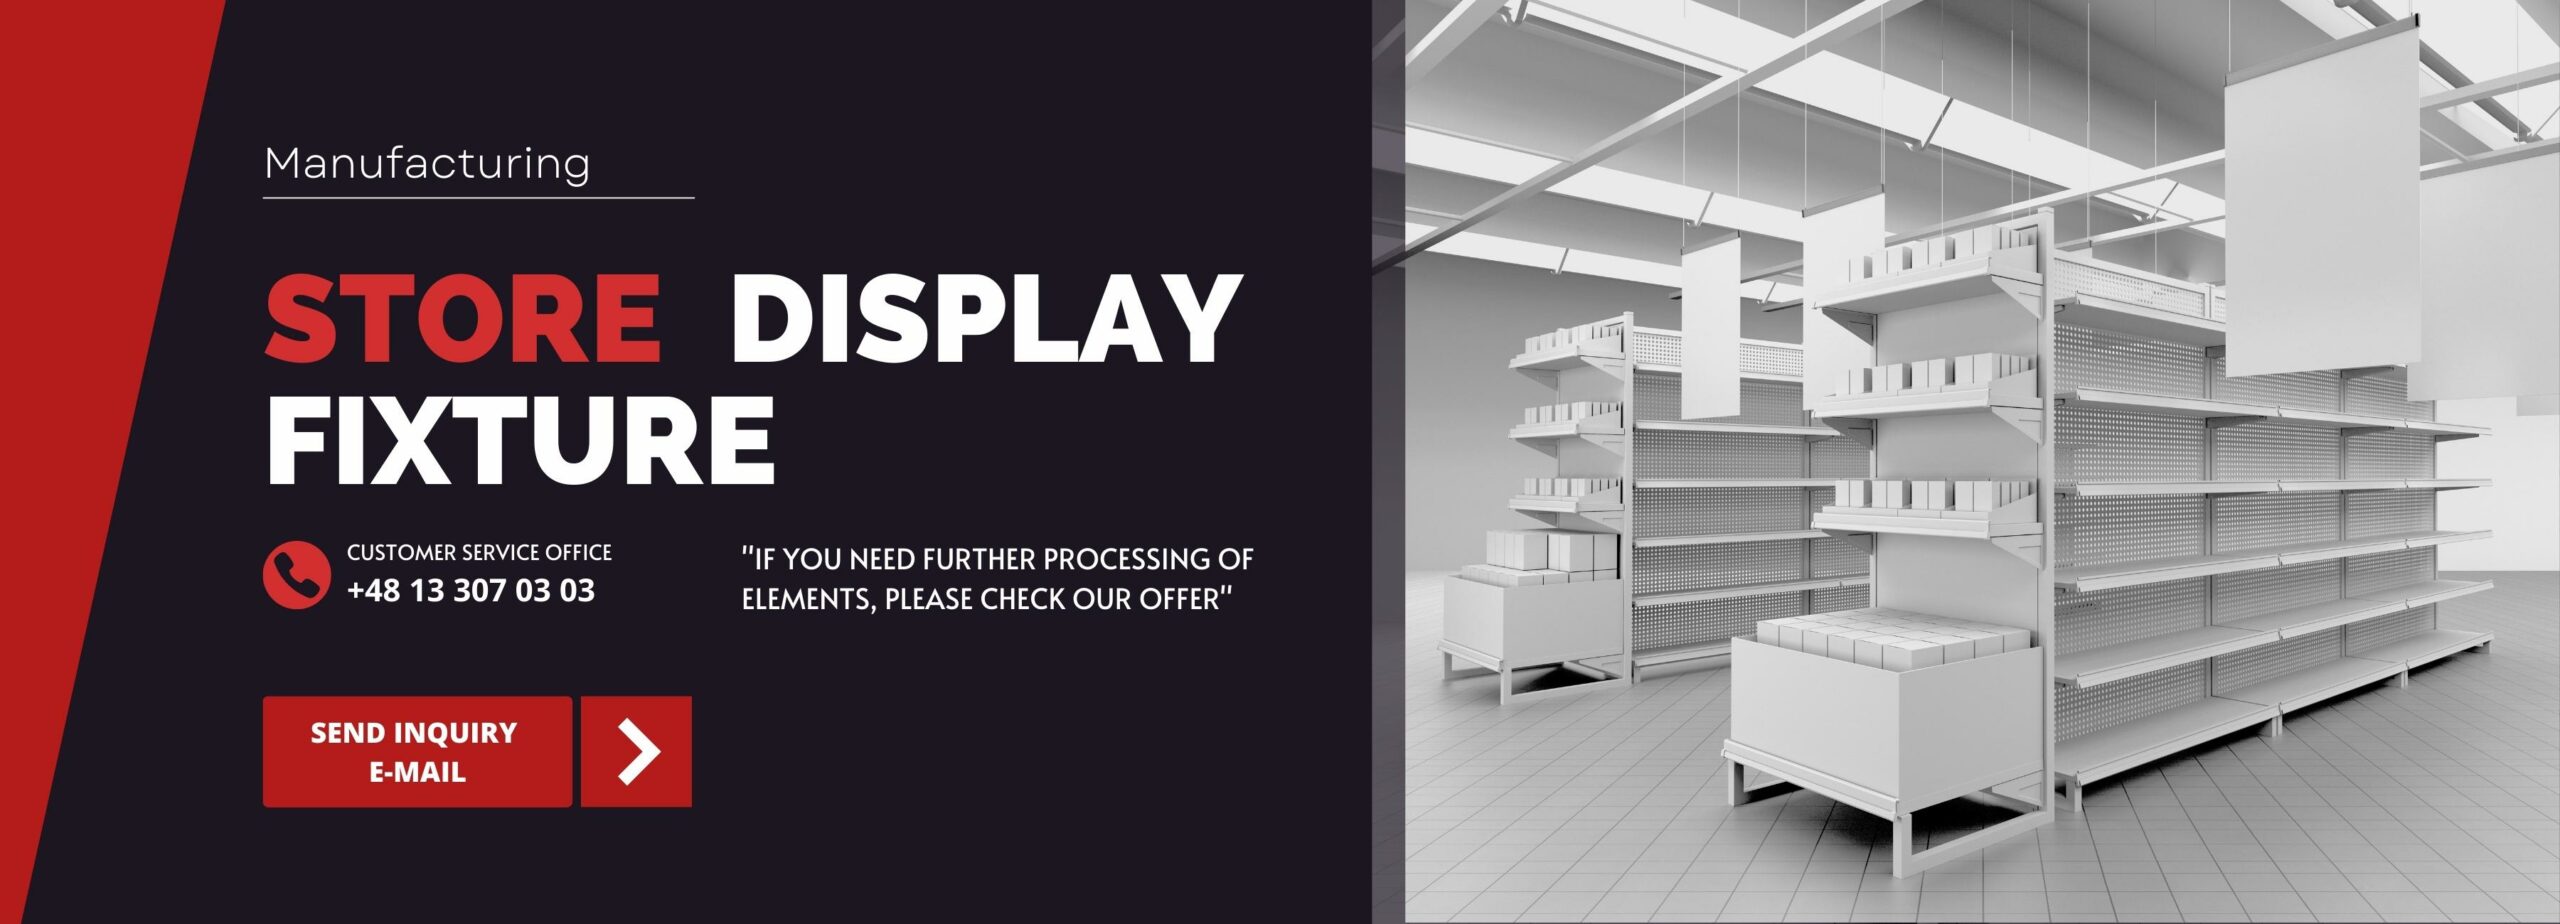 Store Display Fixture manufacturer - 1